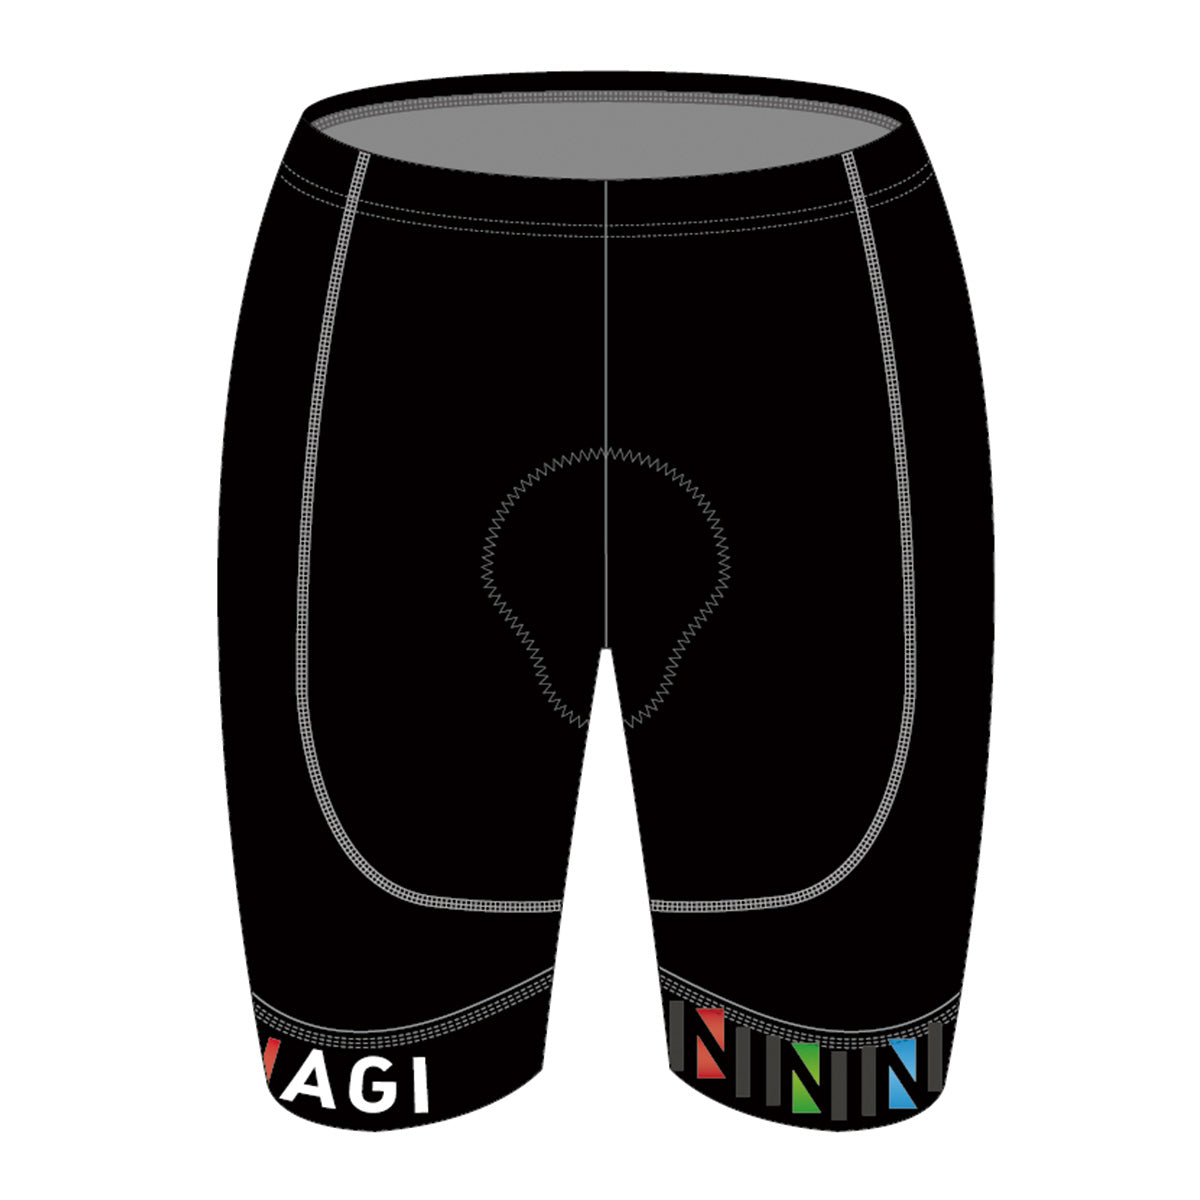 Team Nagi BLACK GOLD Cycling Shorts